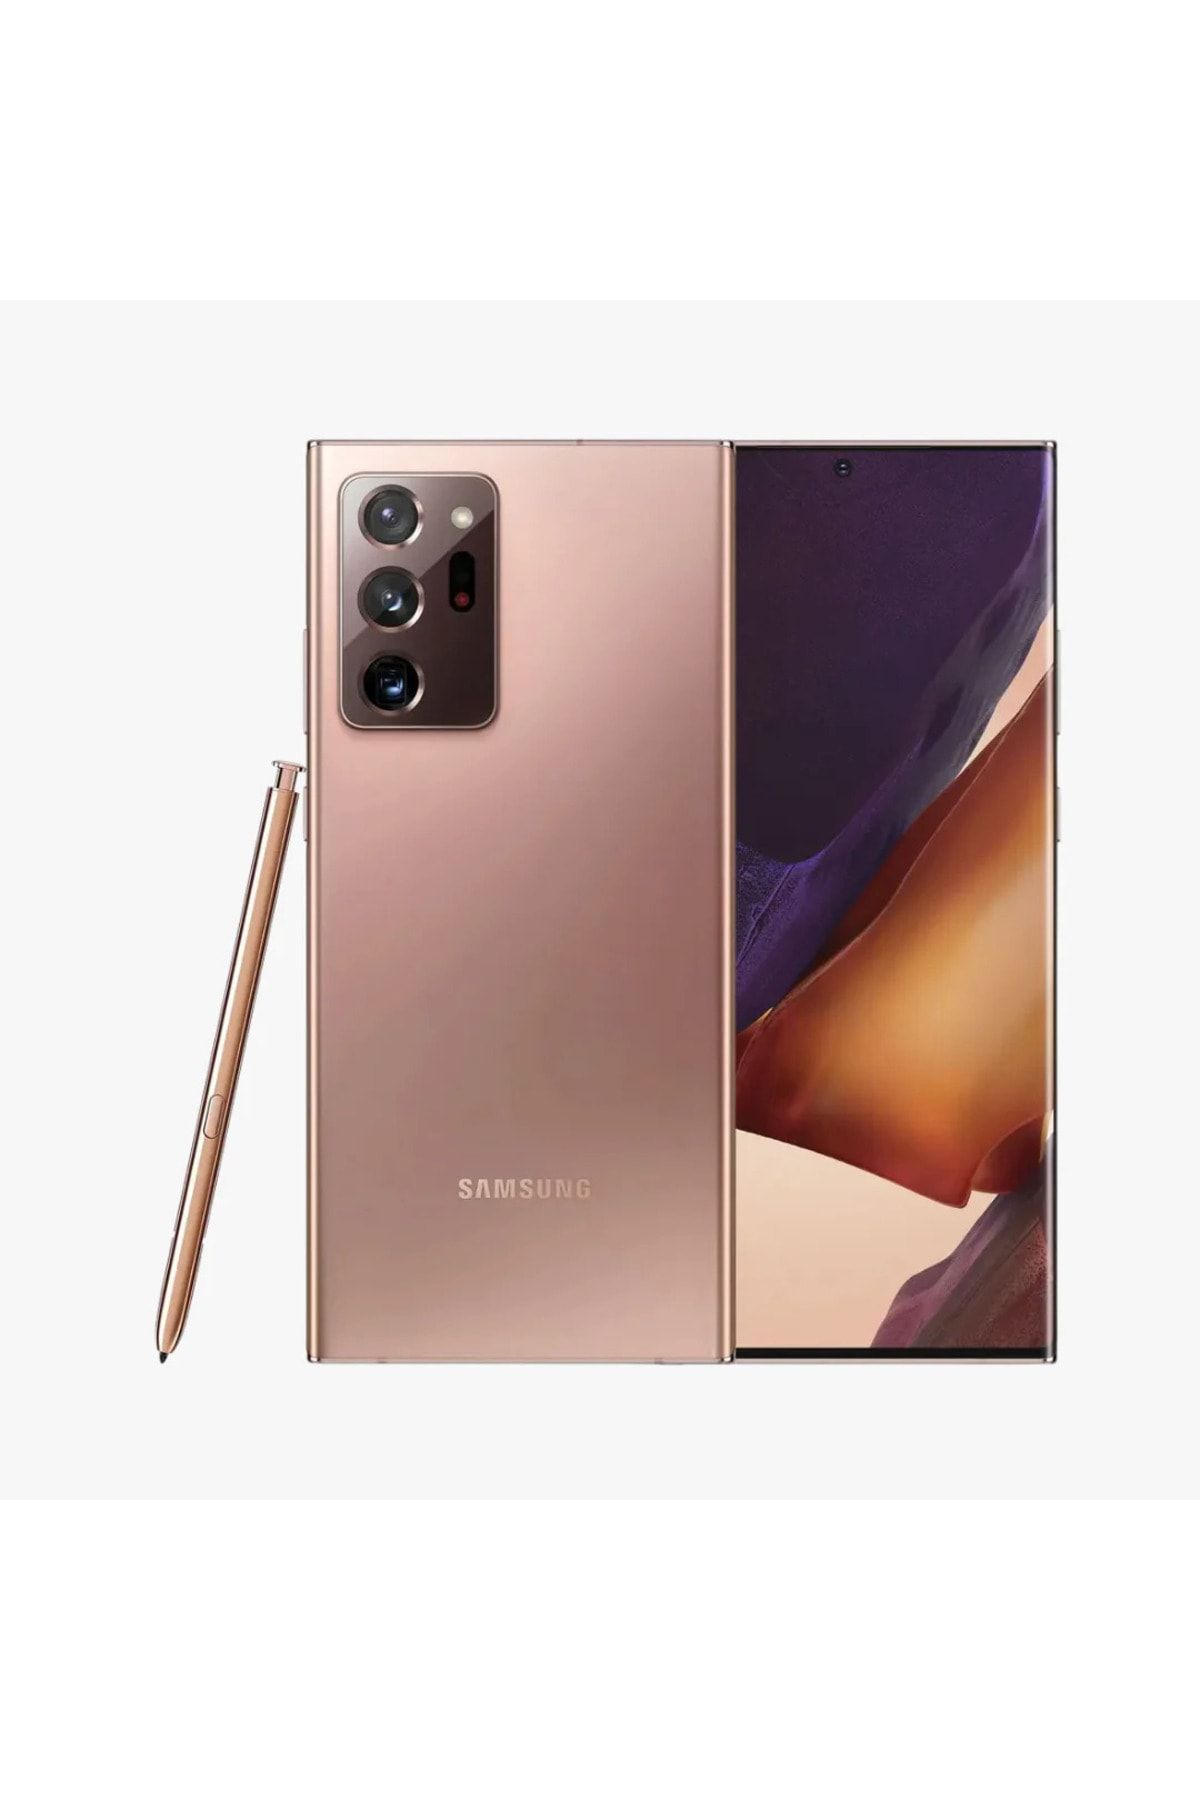 Samsung Yenilenmiş Galaxy Note 20 Ultra 256GB Gold Cep Telefonu (12 Ay Garantili) - B Kalite